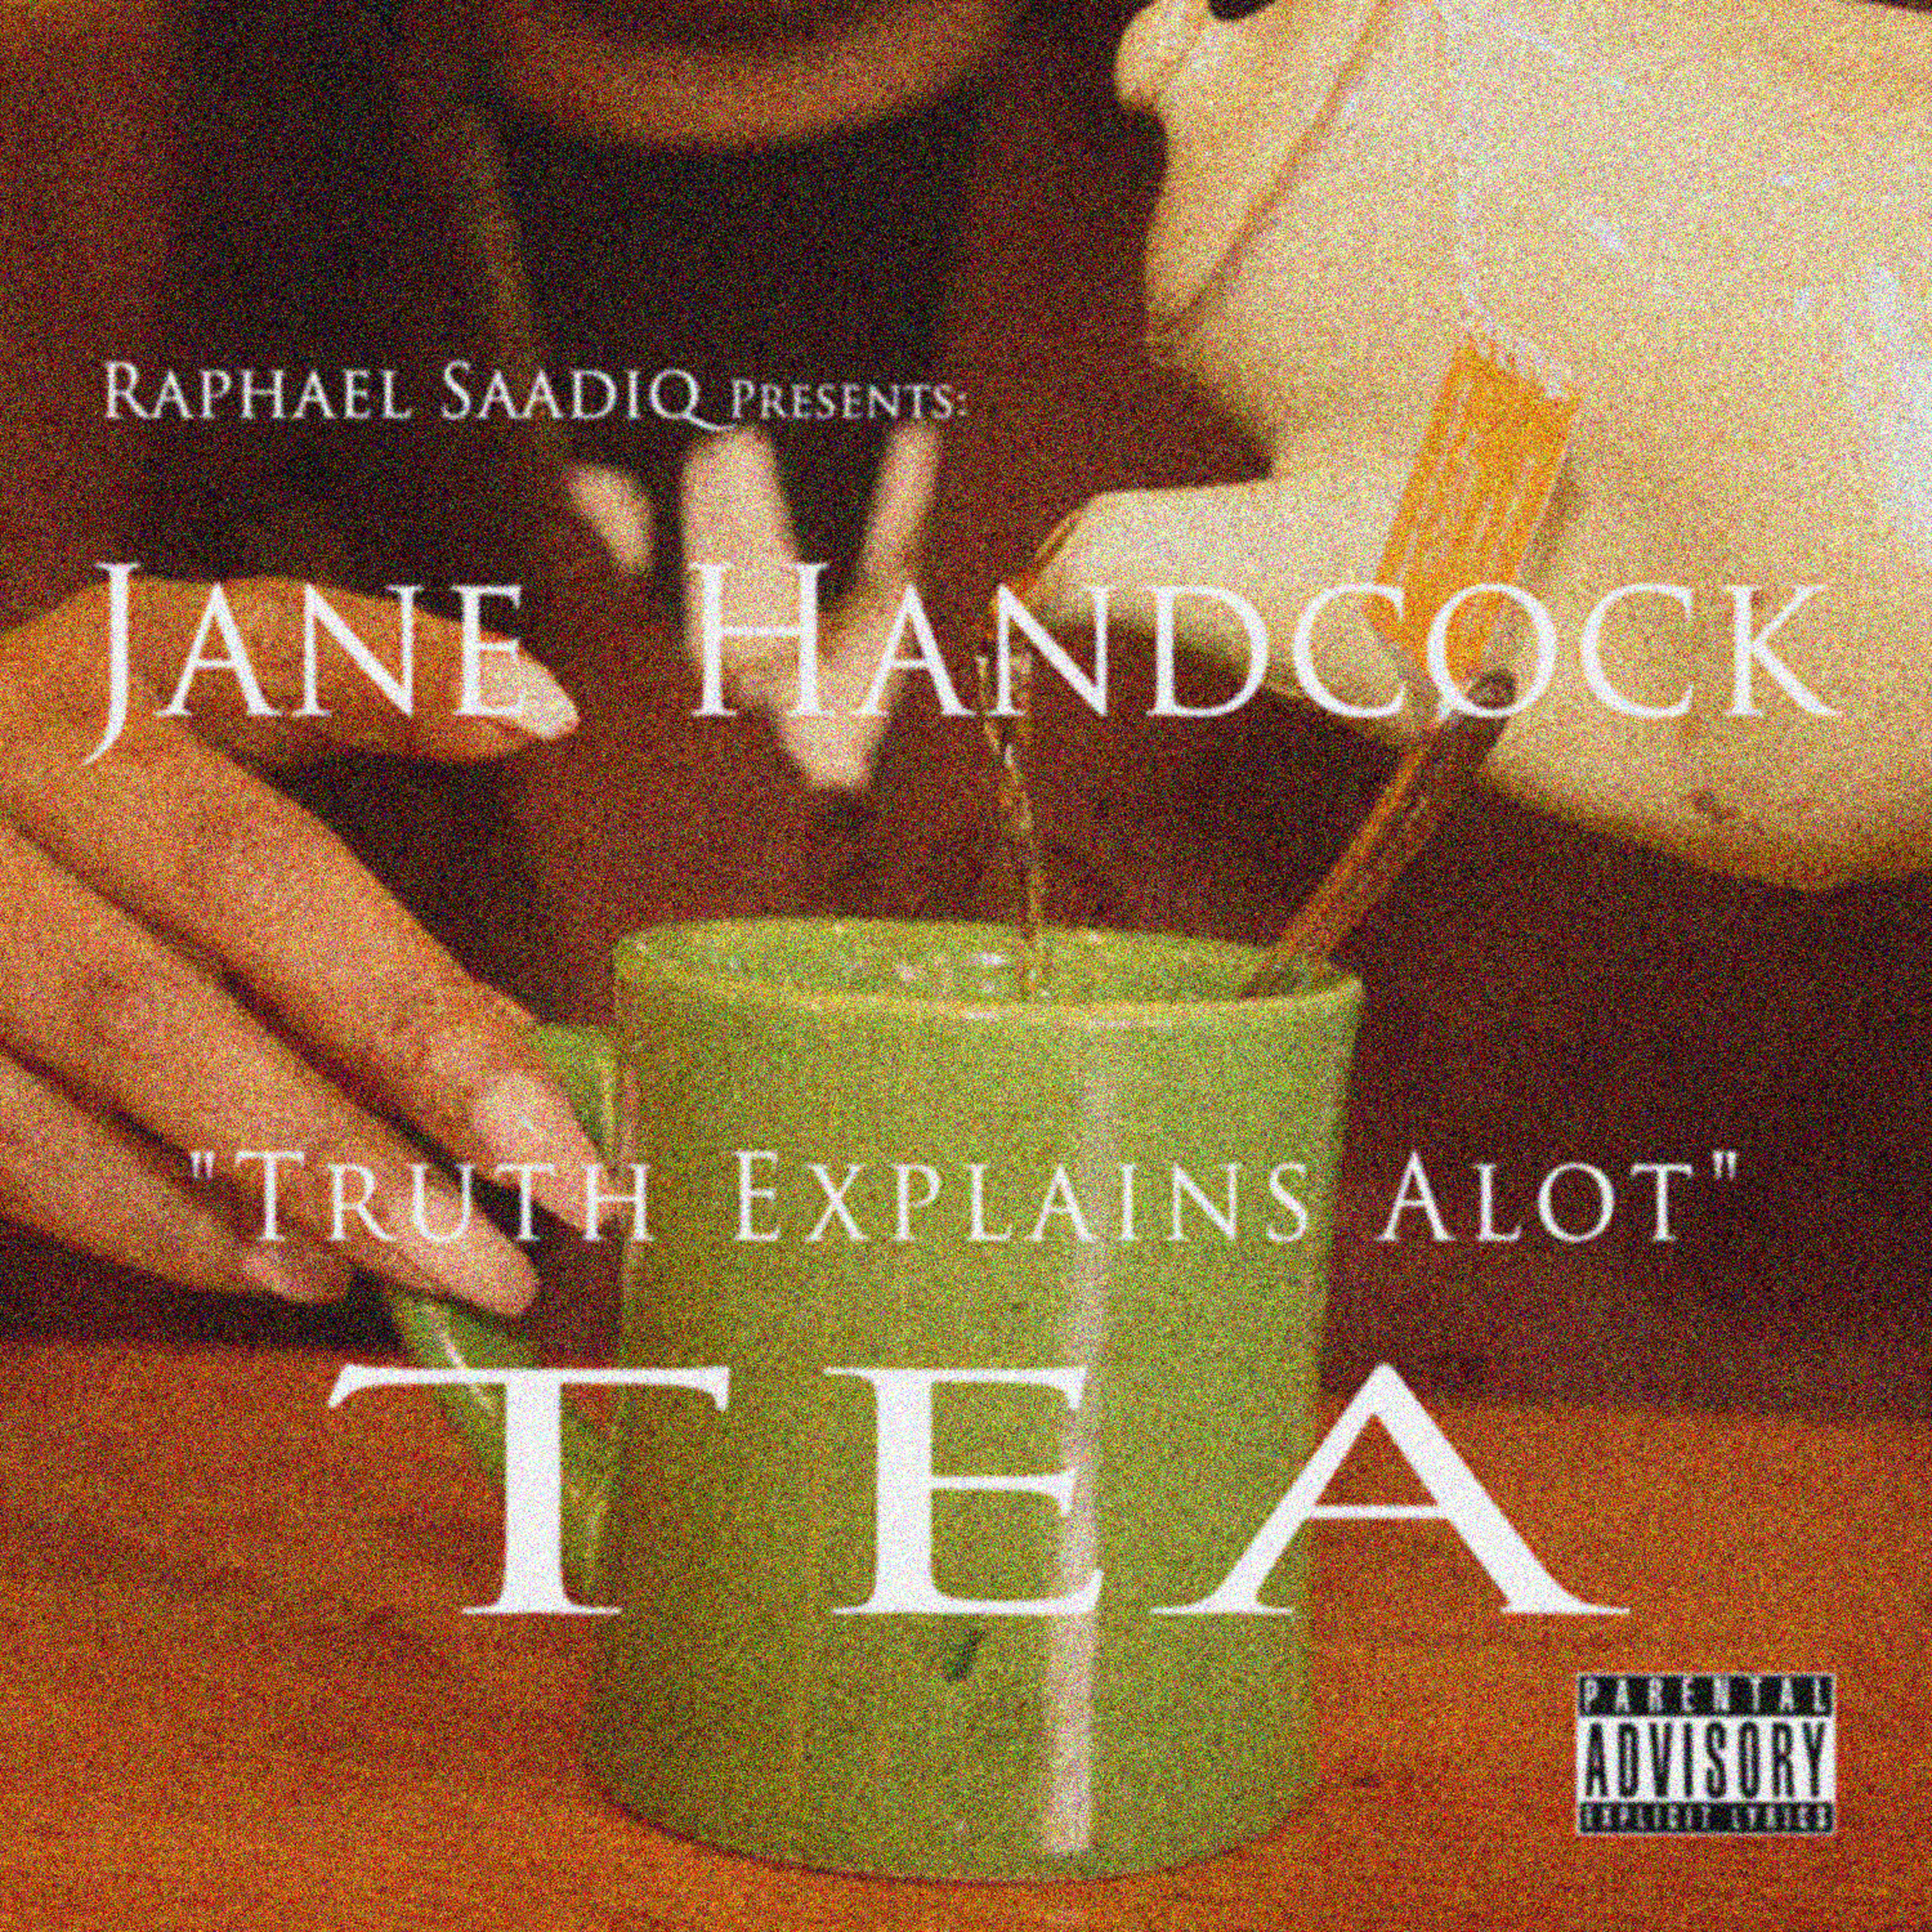 Raphael Saadiq Presents: Jane Handcock "Truth Explains A Lot"